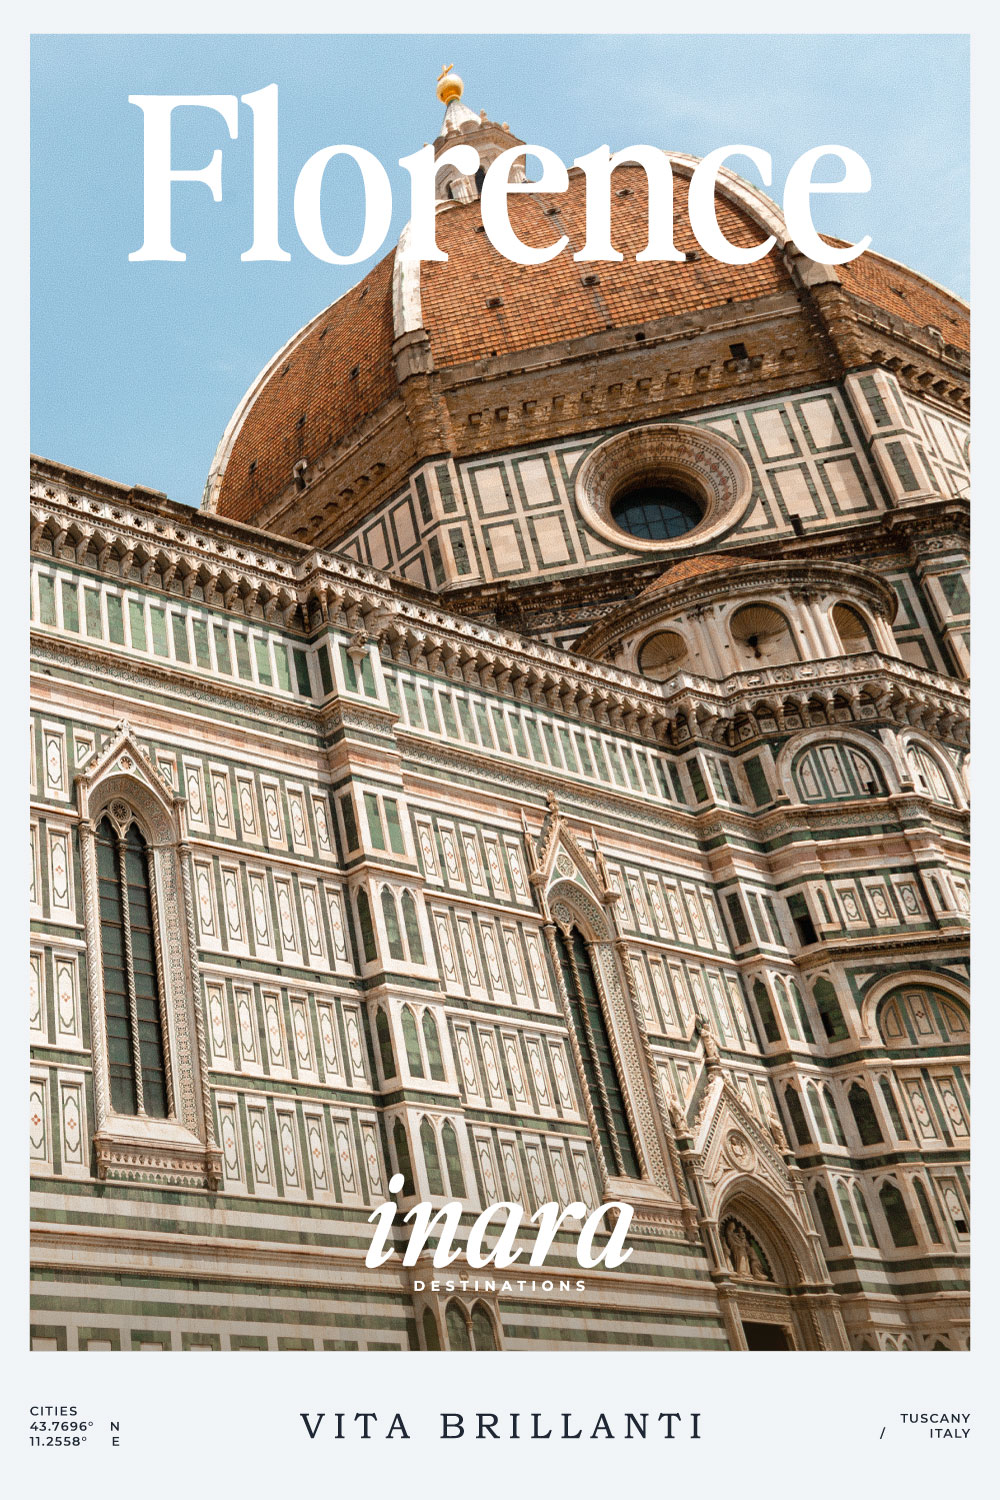 Florence destination cover